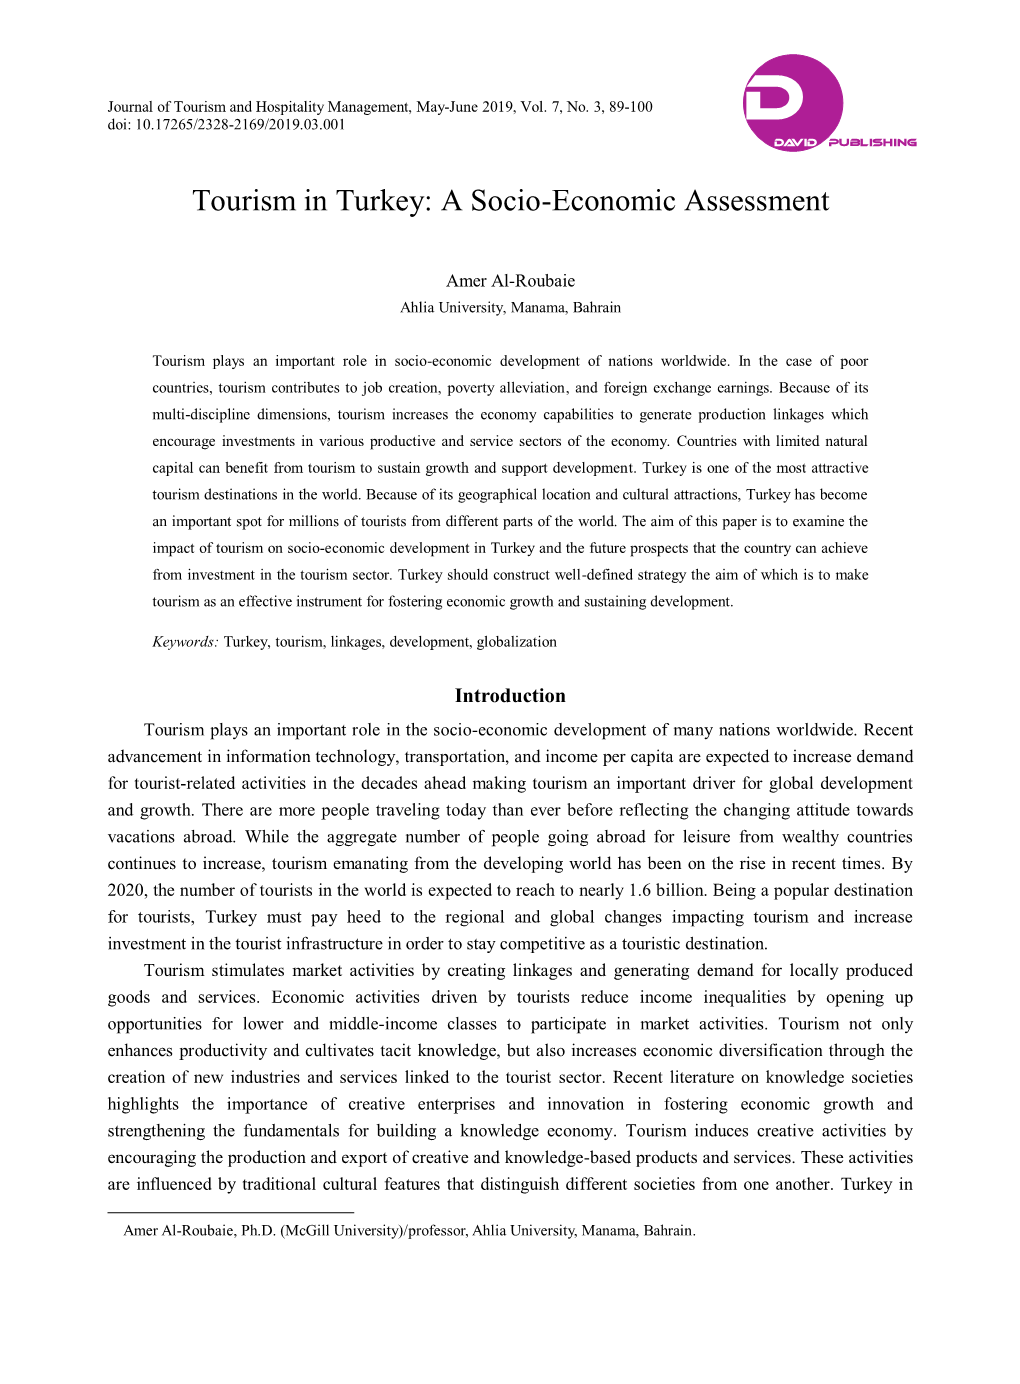 Tourism in Turkey: a Socio-Economic Assessment